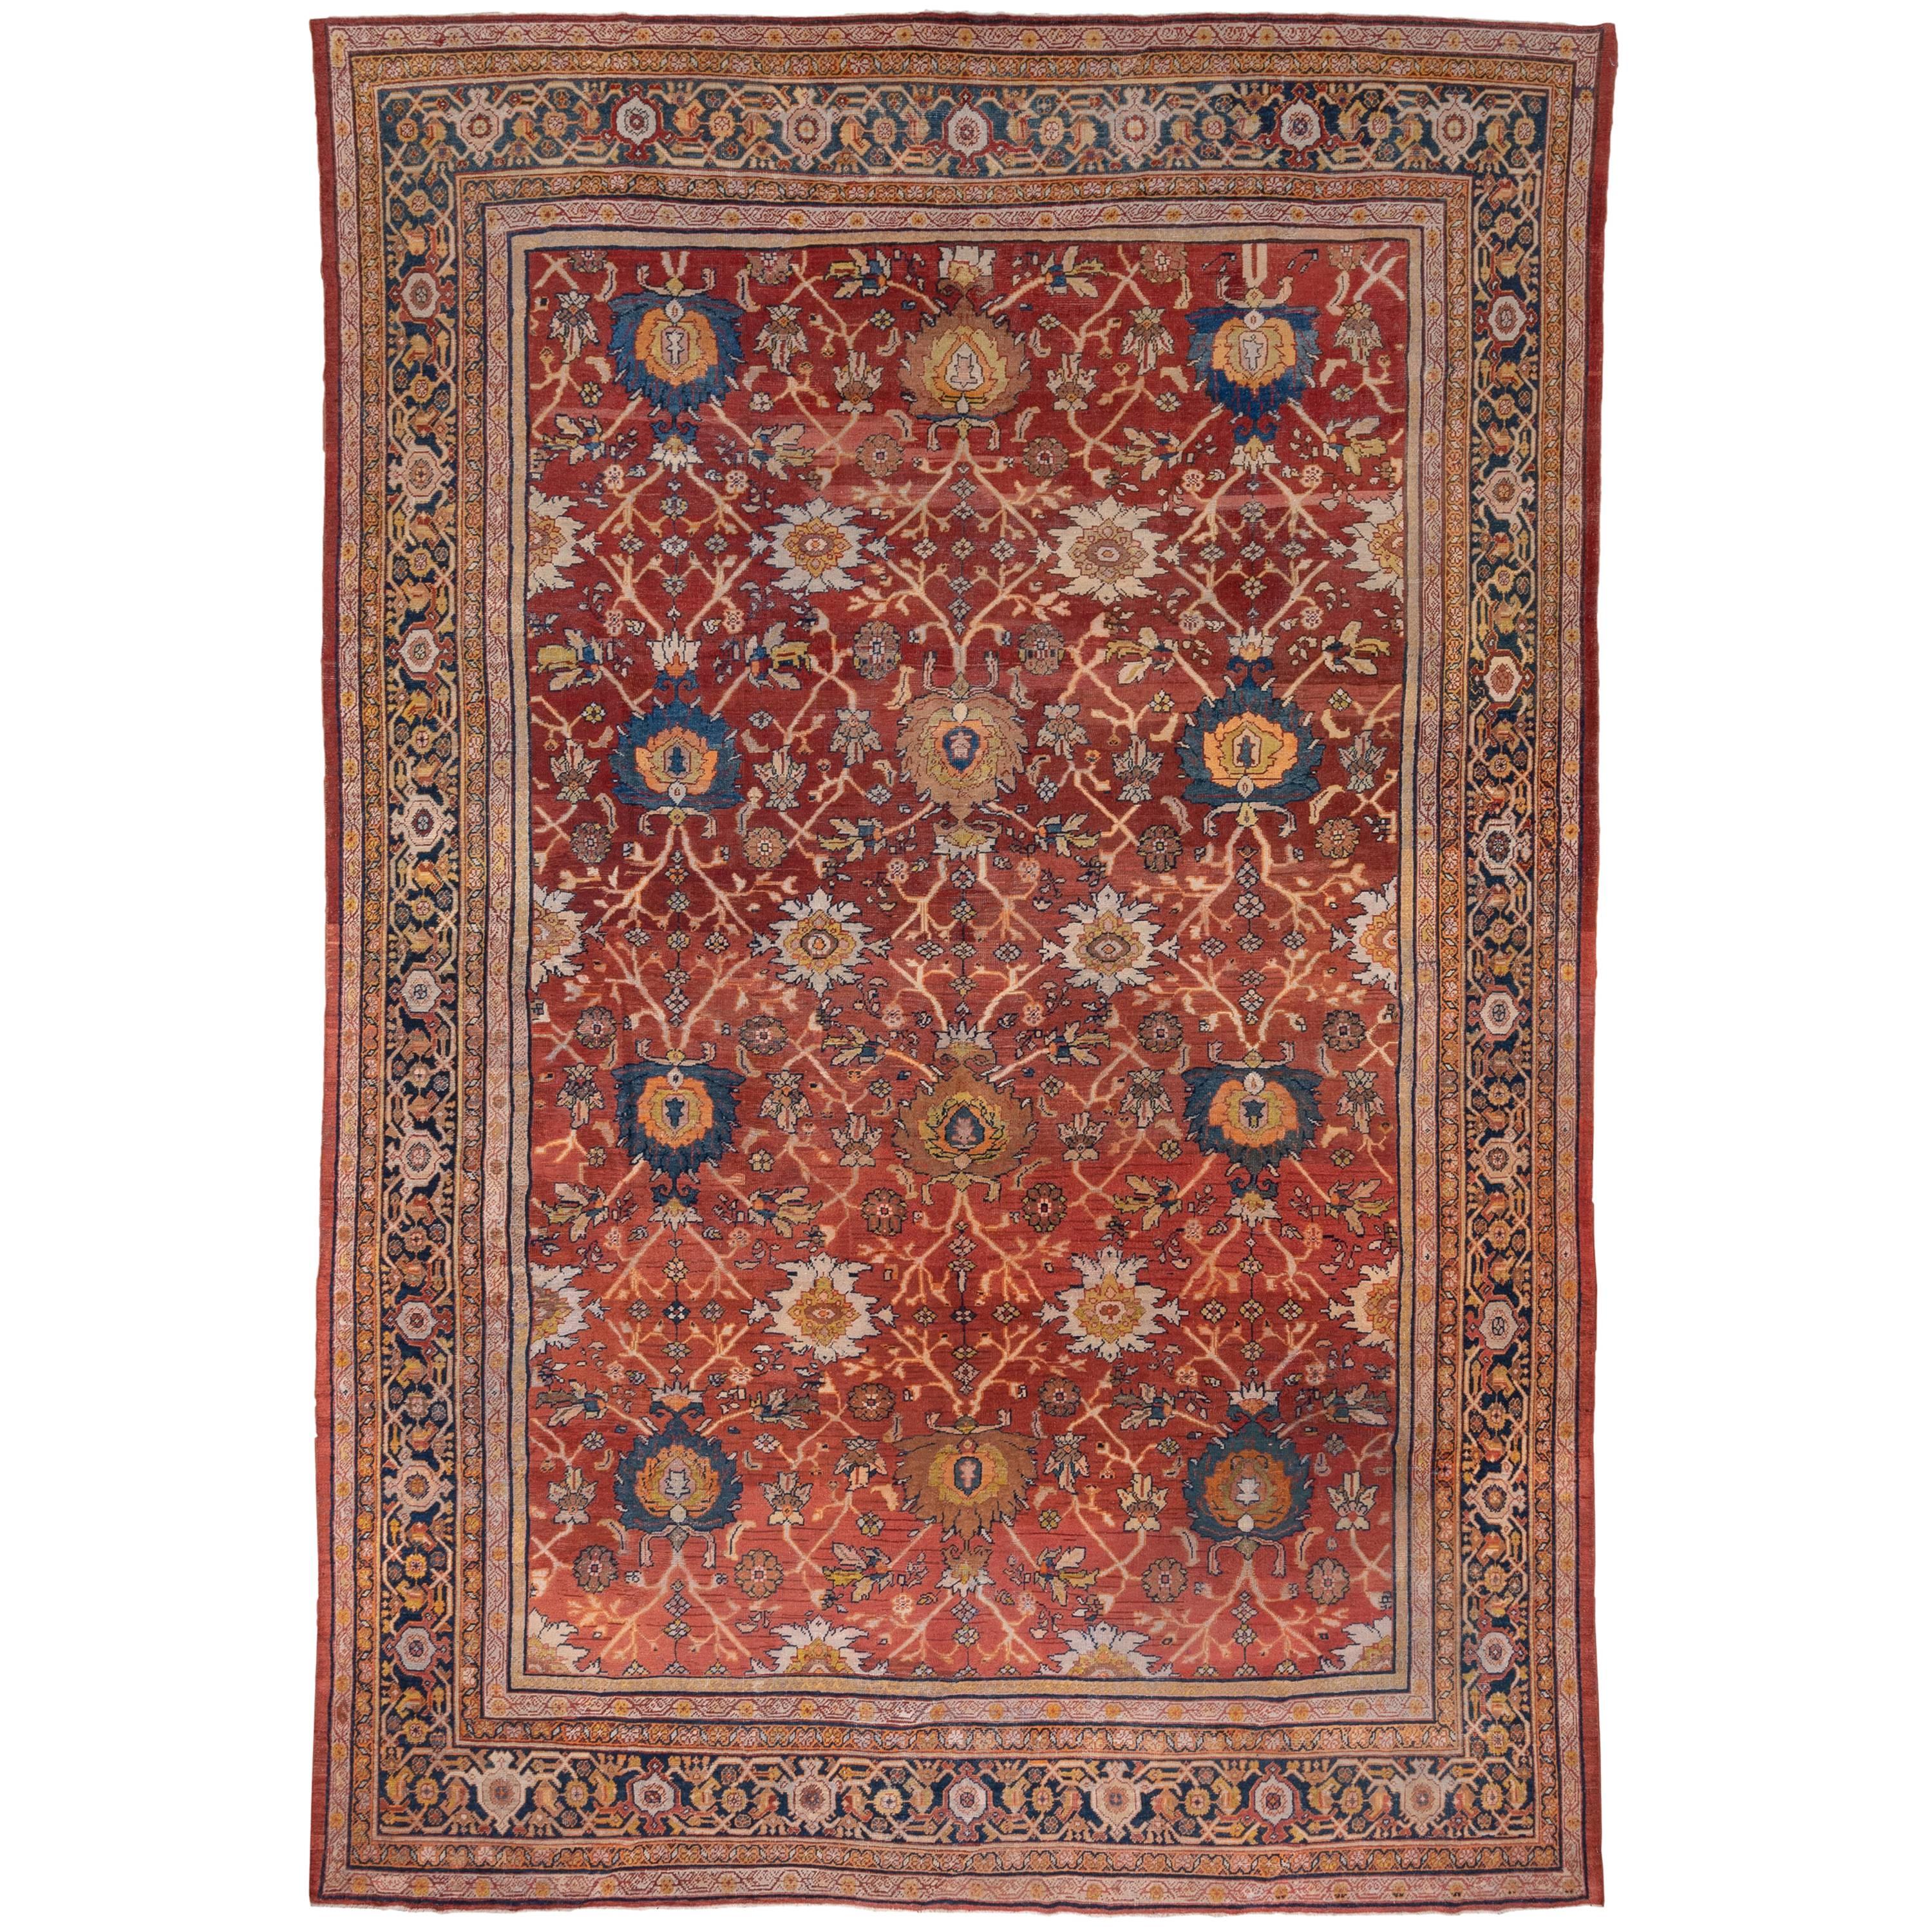 Antique Red Persian Mahal Carpet